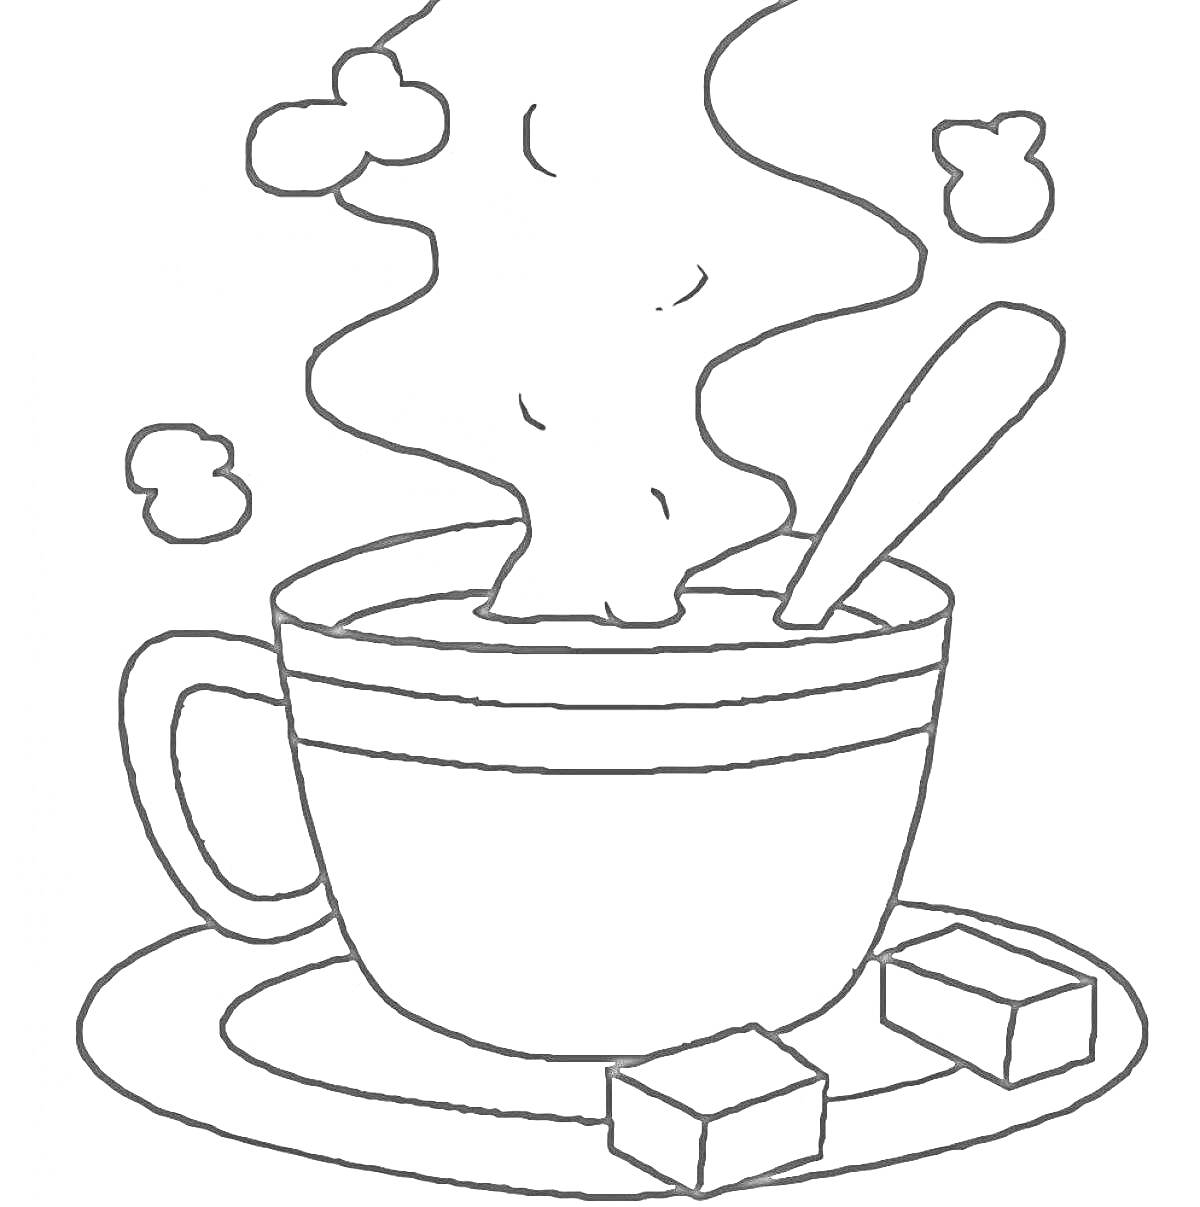 На раскраске изображено: Ложка, Пар, Чай, Кофе, Сахар, Посуда, Блюдца, Чашки